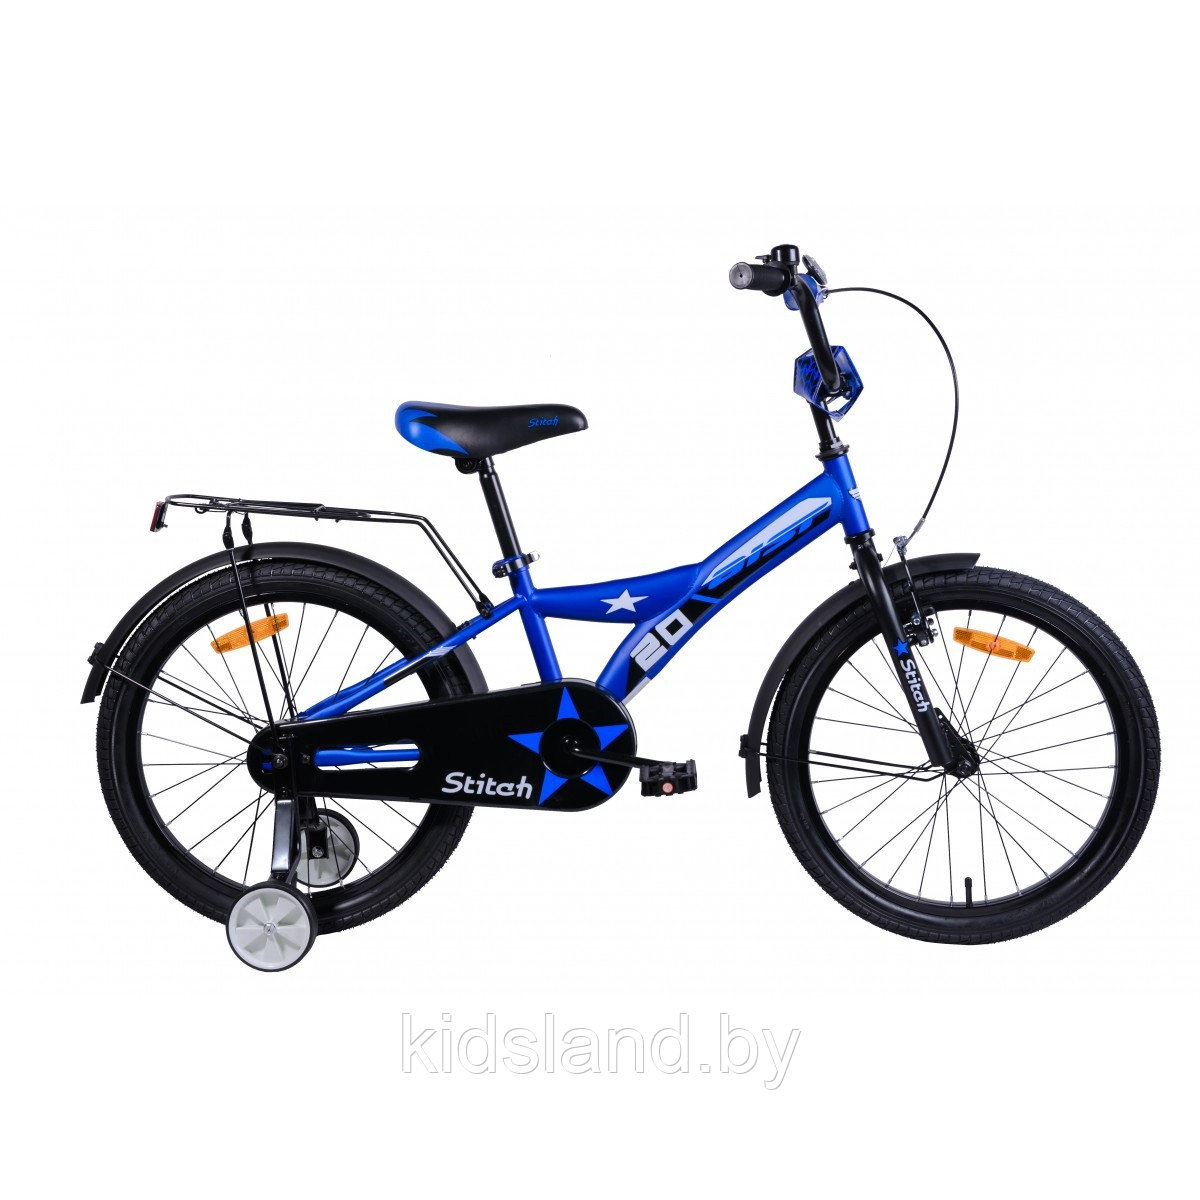 Велосипед Aist Stitch 20"  (синий), фото 1